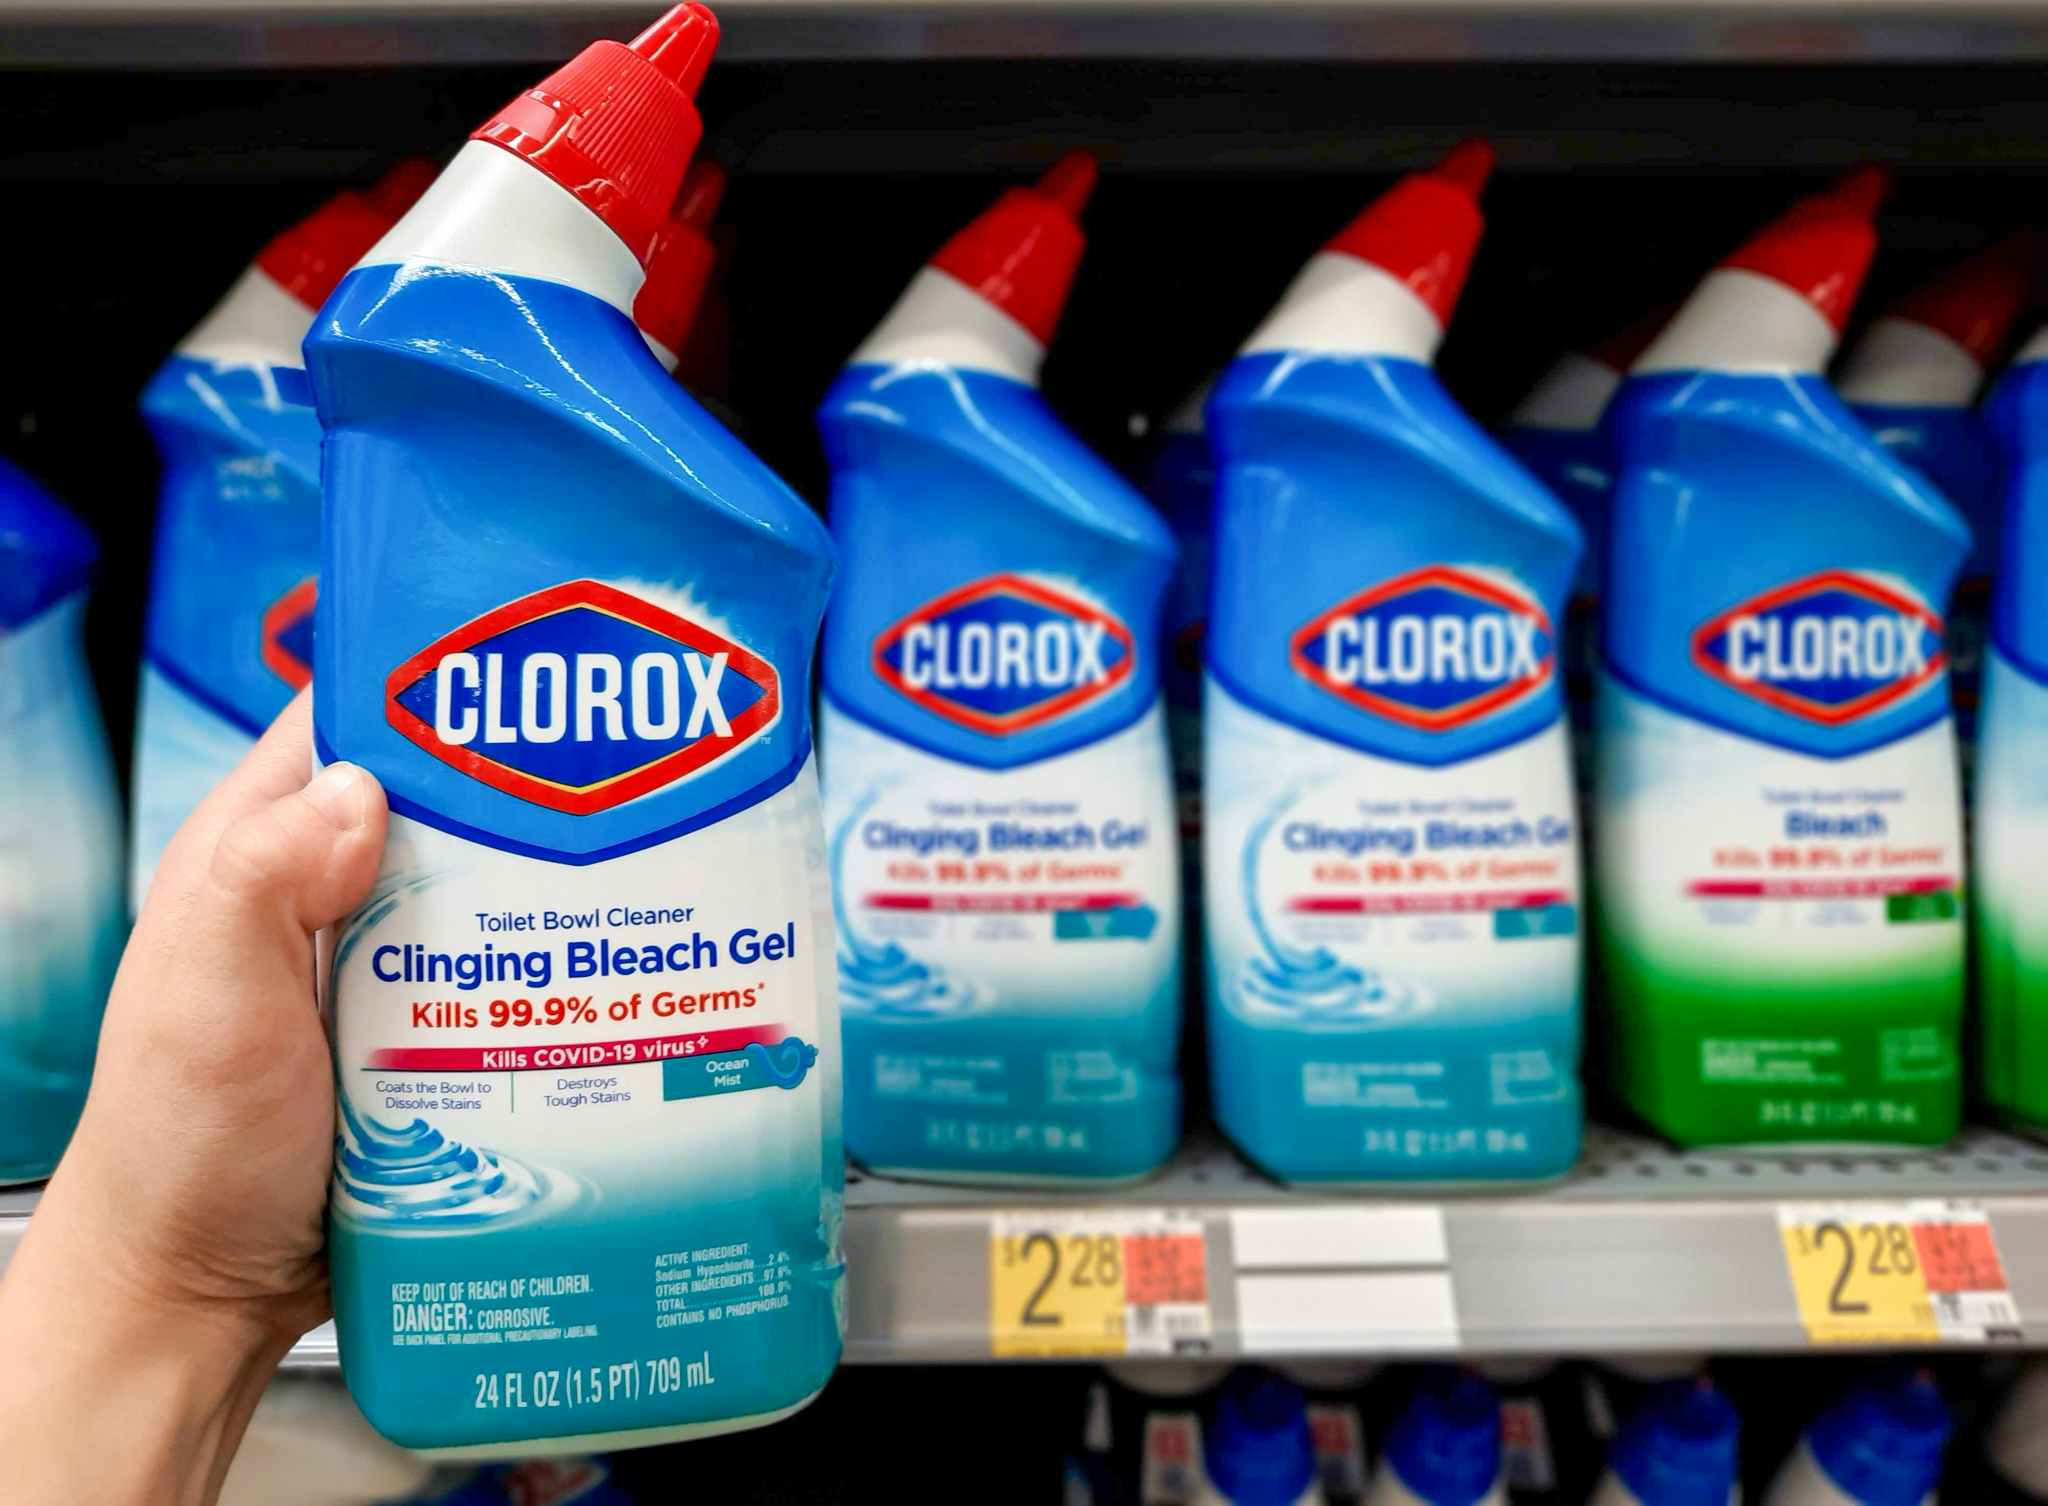 Clorox Clinging Bleach Gel Toilet Bowl Cleaner held in front of shelf at Walmart